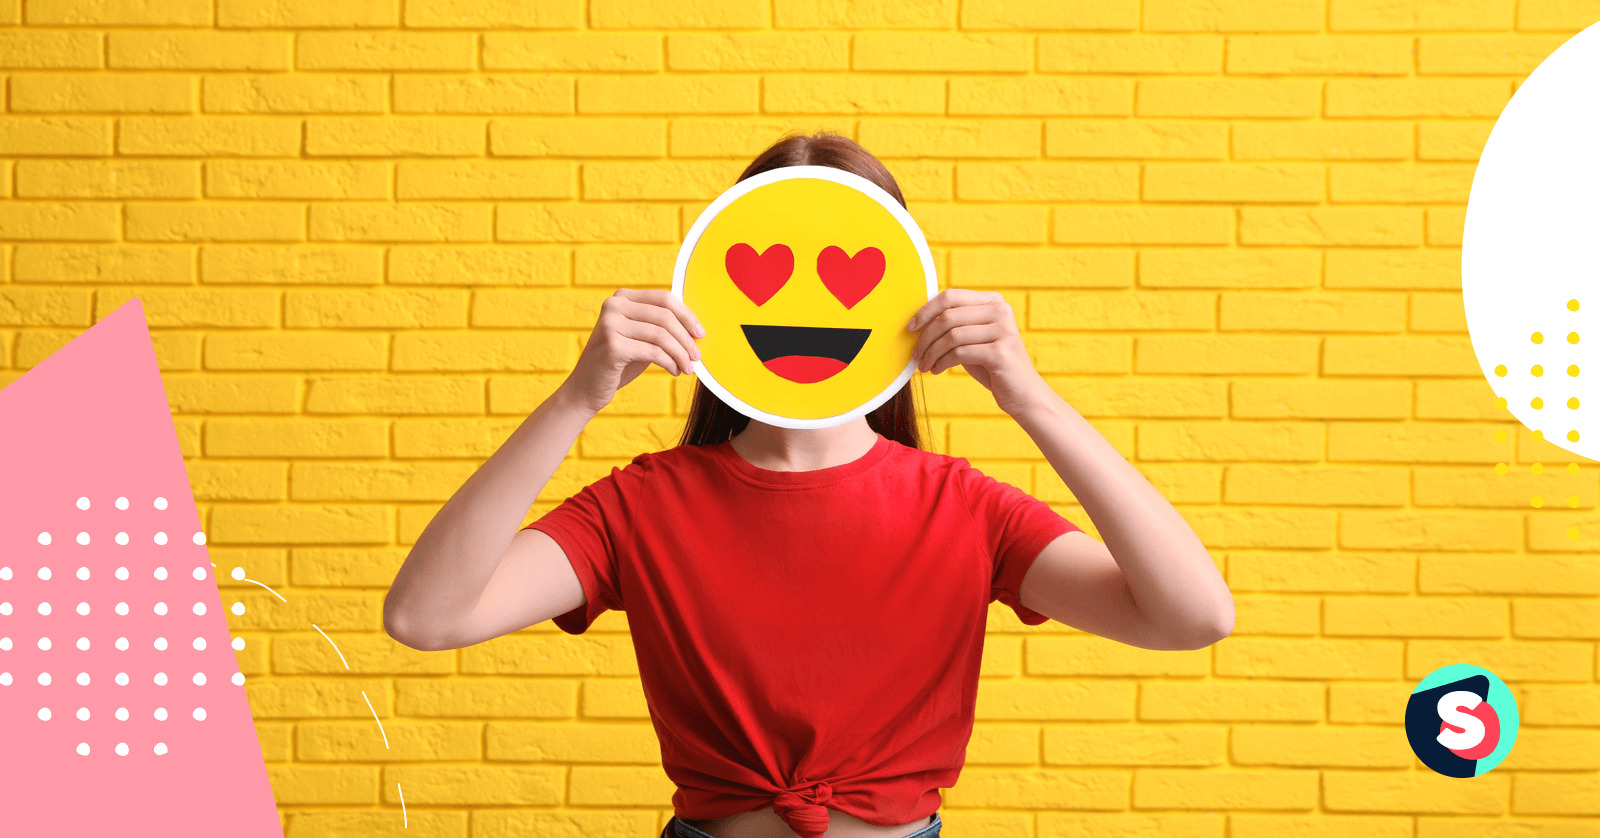 Master list of unicode emojis for your business | Burst SMS Blog